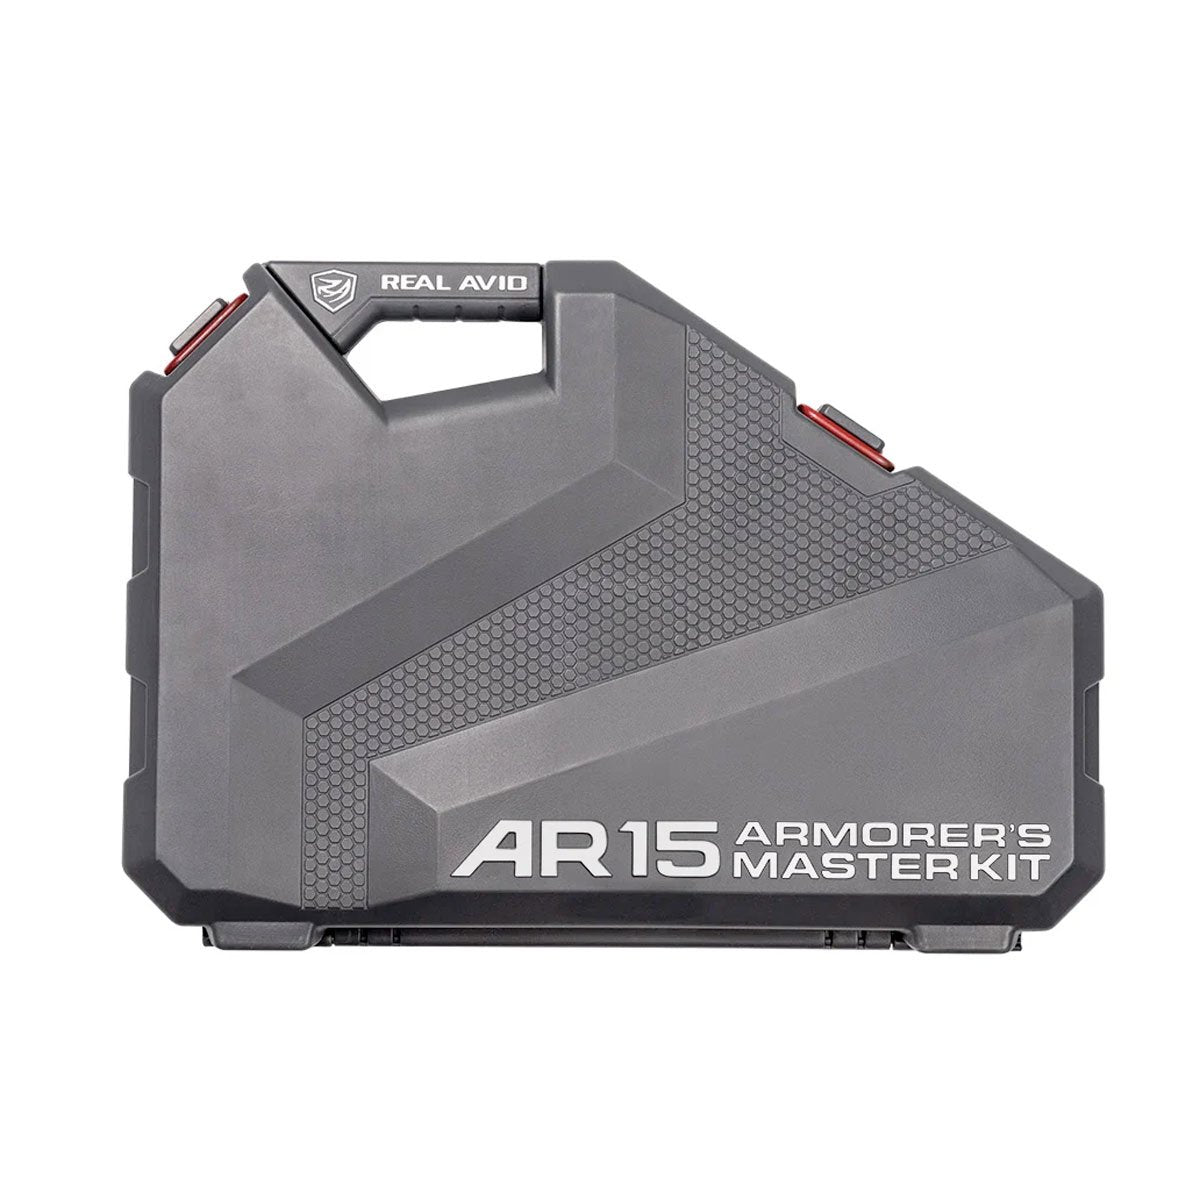 Real Avid AR15 Armorer's Master Kit Accessories Real Avid Tactical Gear Supplier Tactical Distributors Australia